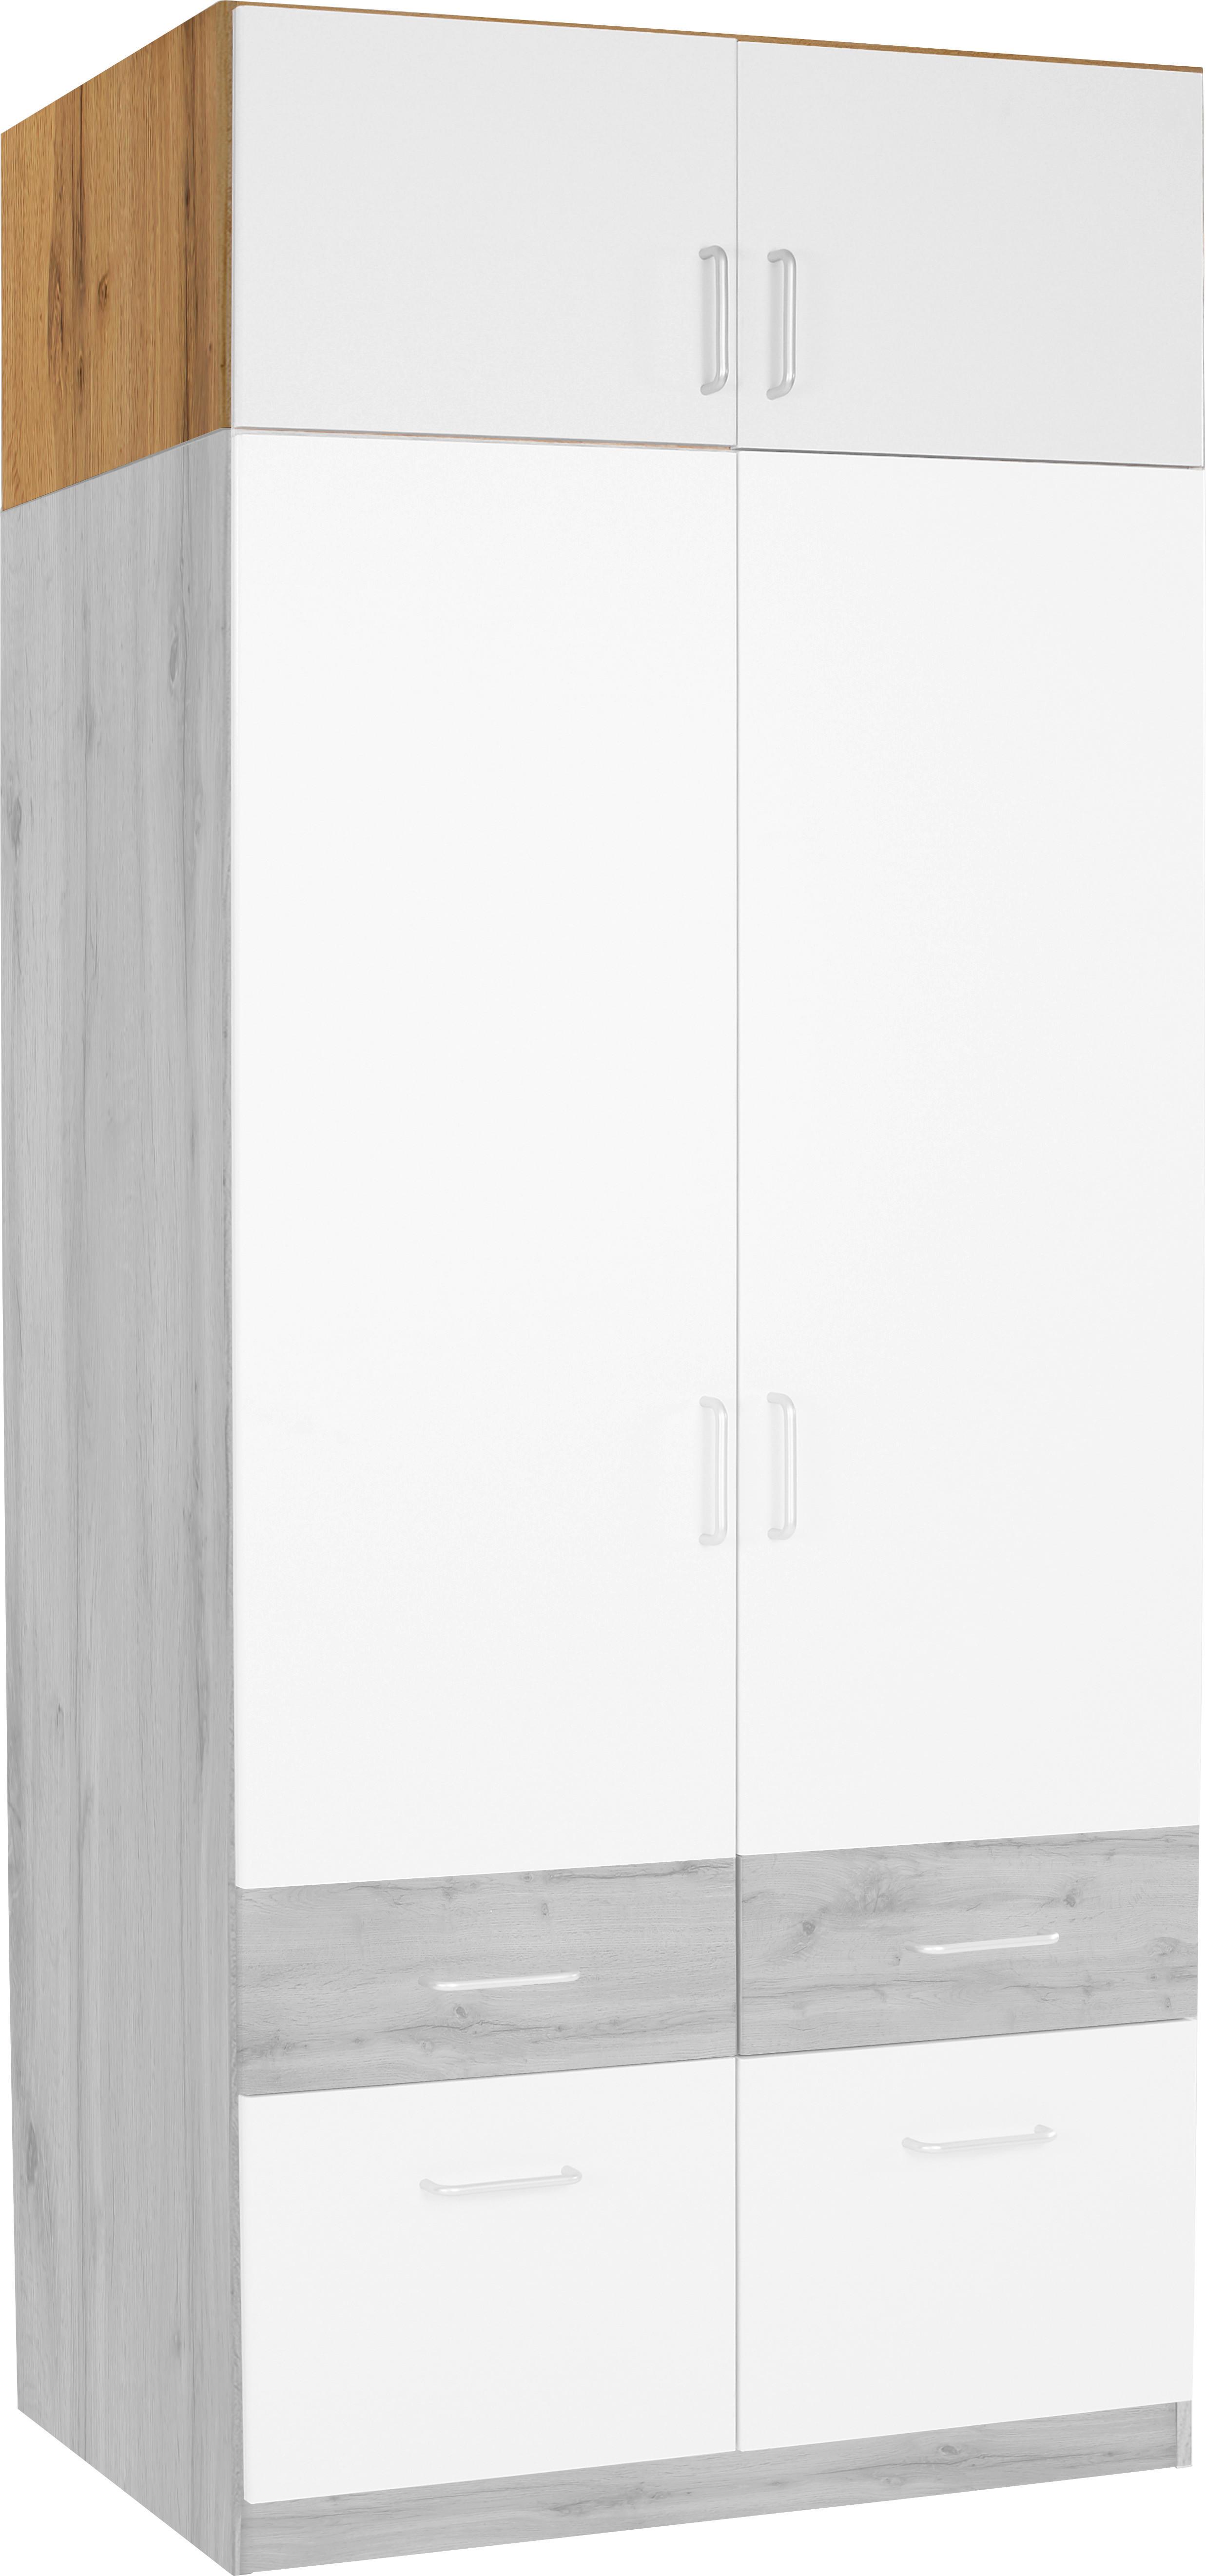 Nastavek Za Omaro Aalen-Extra - aluminij/bela, Konvencionalno, umetna masa/leseni material (91/39/54cm) - Modern Living